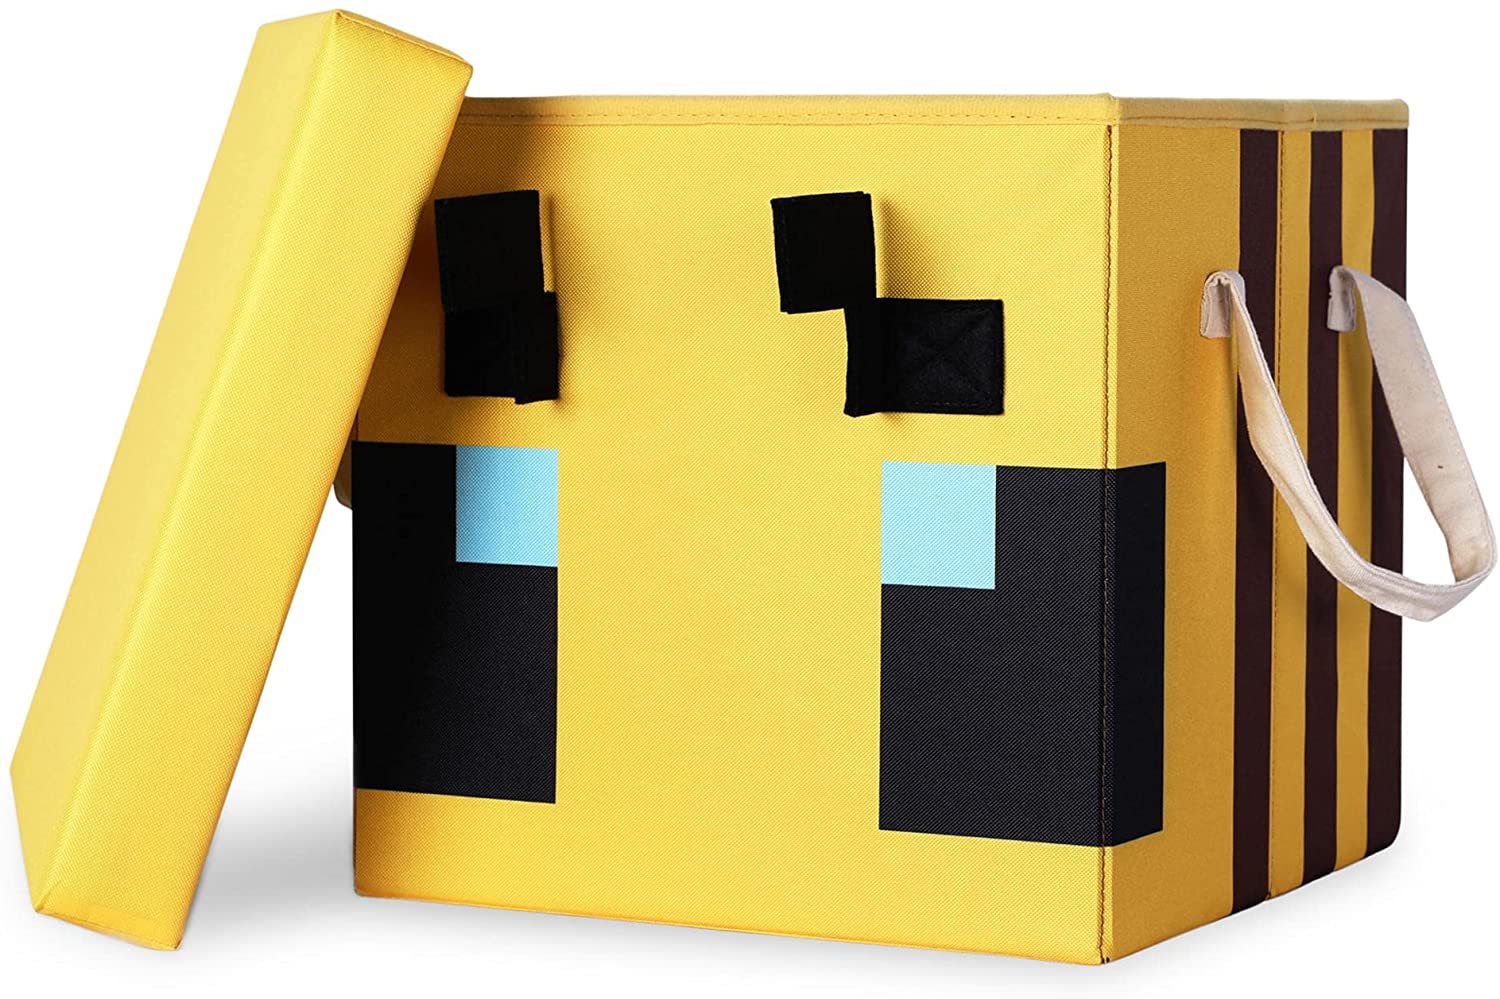 Minecraft anime storage box 38*38*38cm